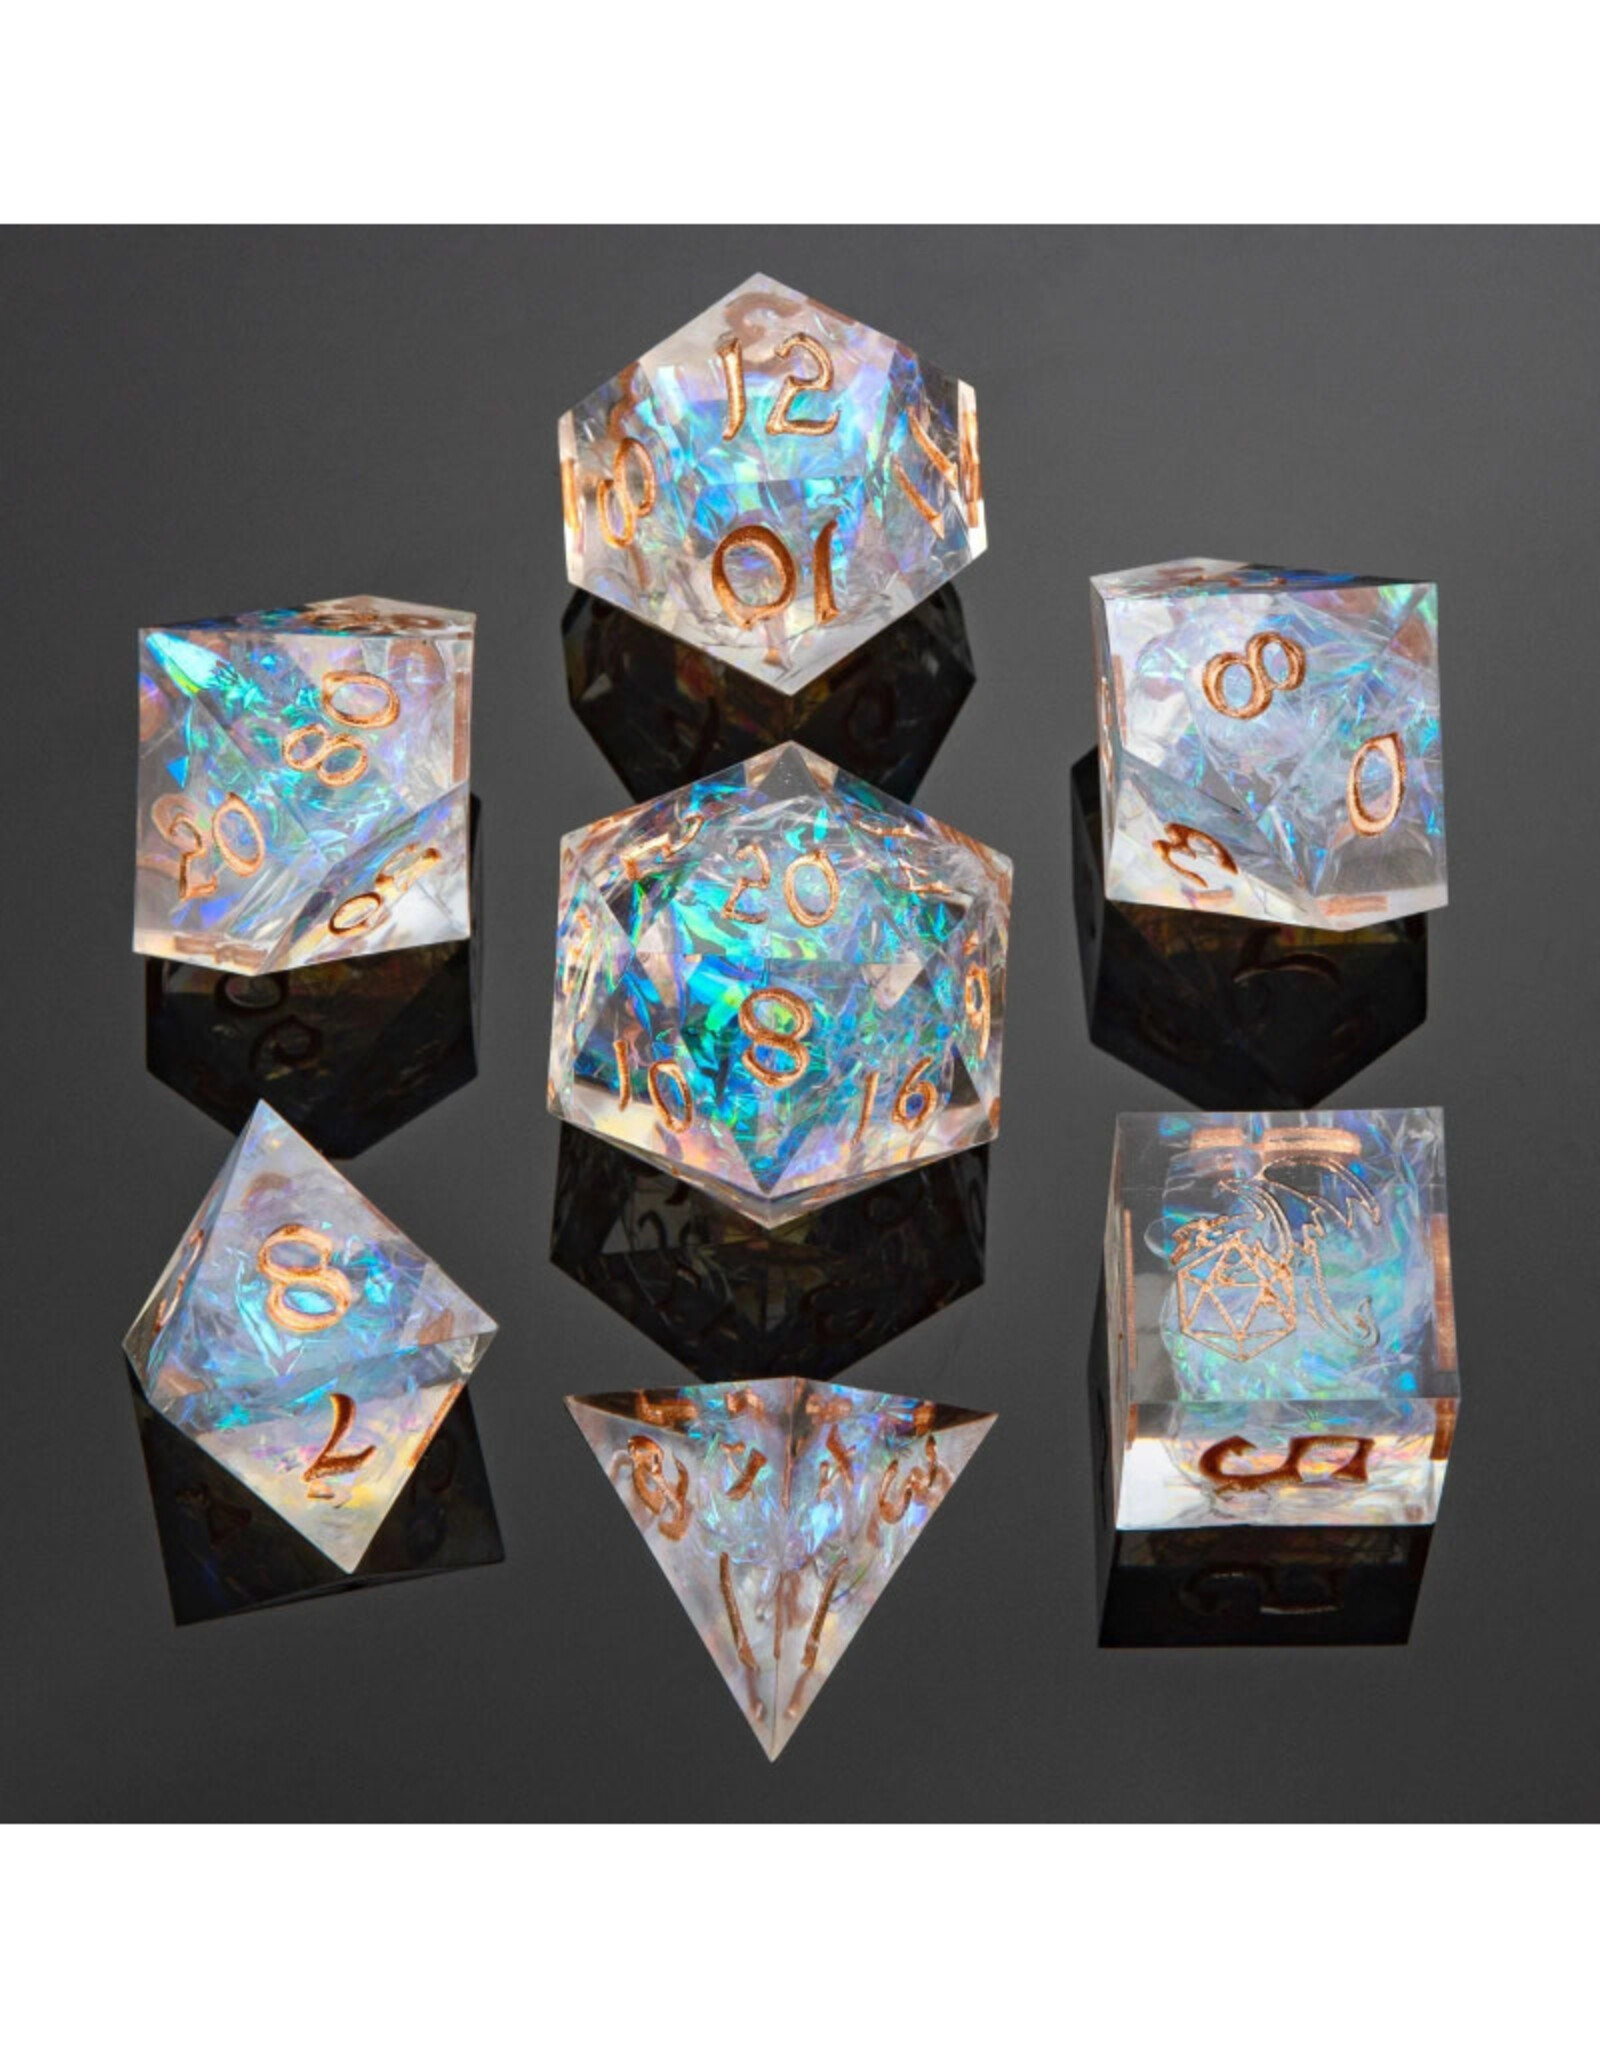 Hymgho Premium Dice Hymgho Polyhedral Dice (7) Captured Magic Opal